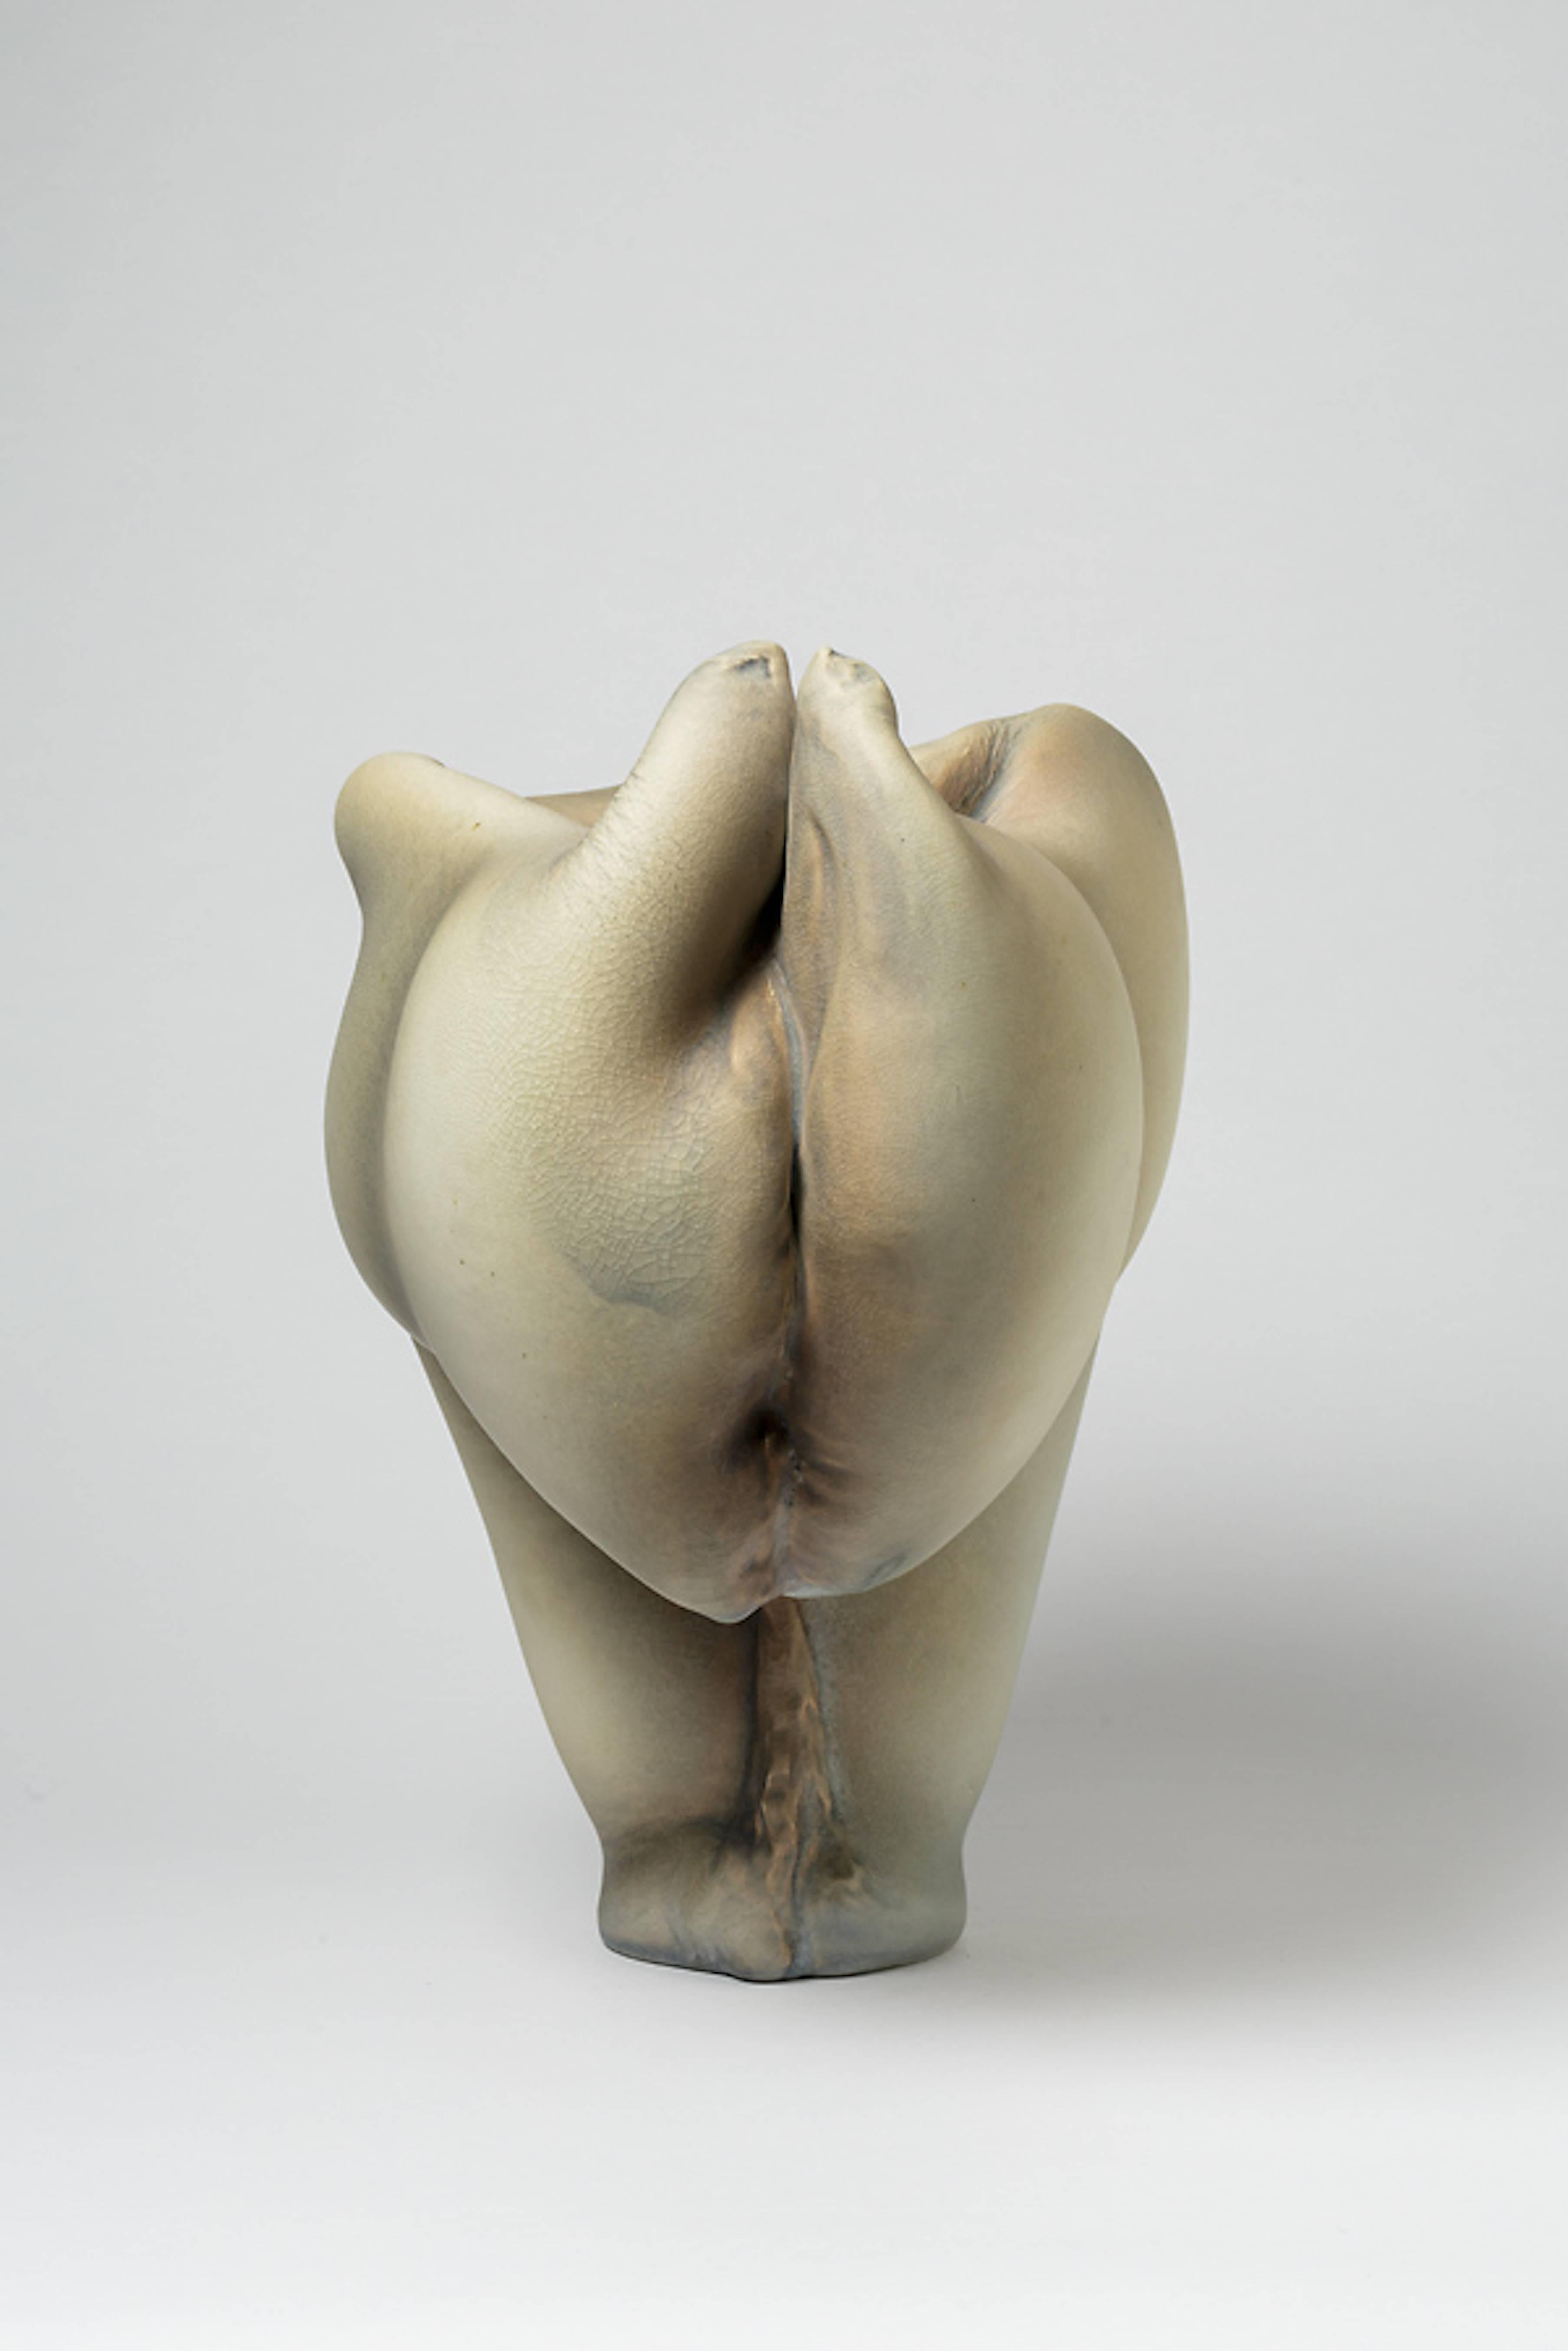 Molded Extraordinary Porcelain Sculpture by Wayne Fischer, circa 2003